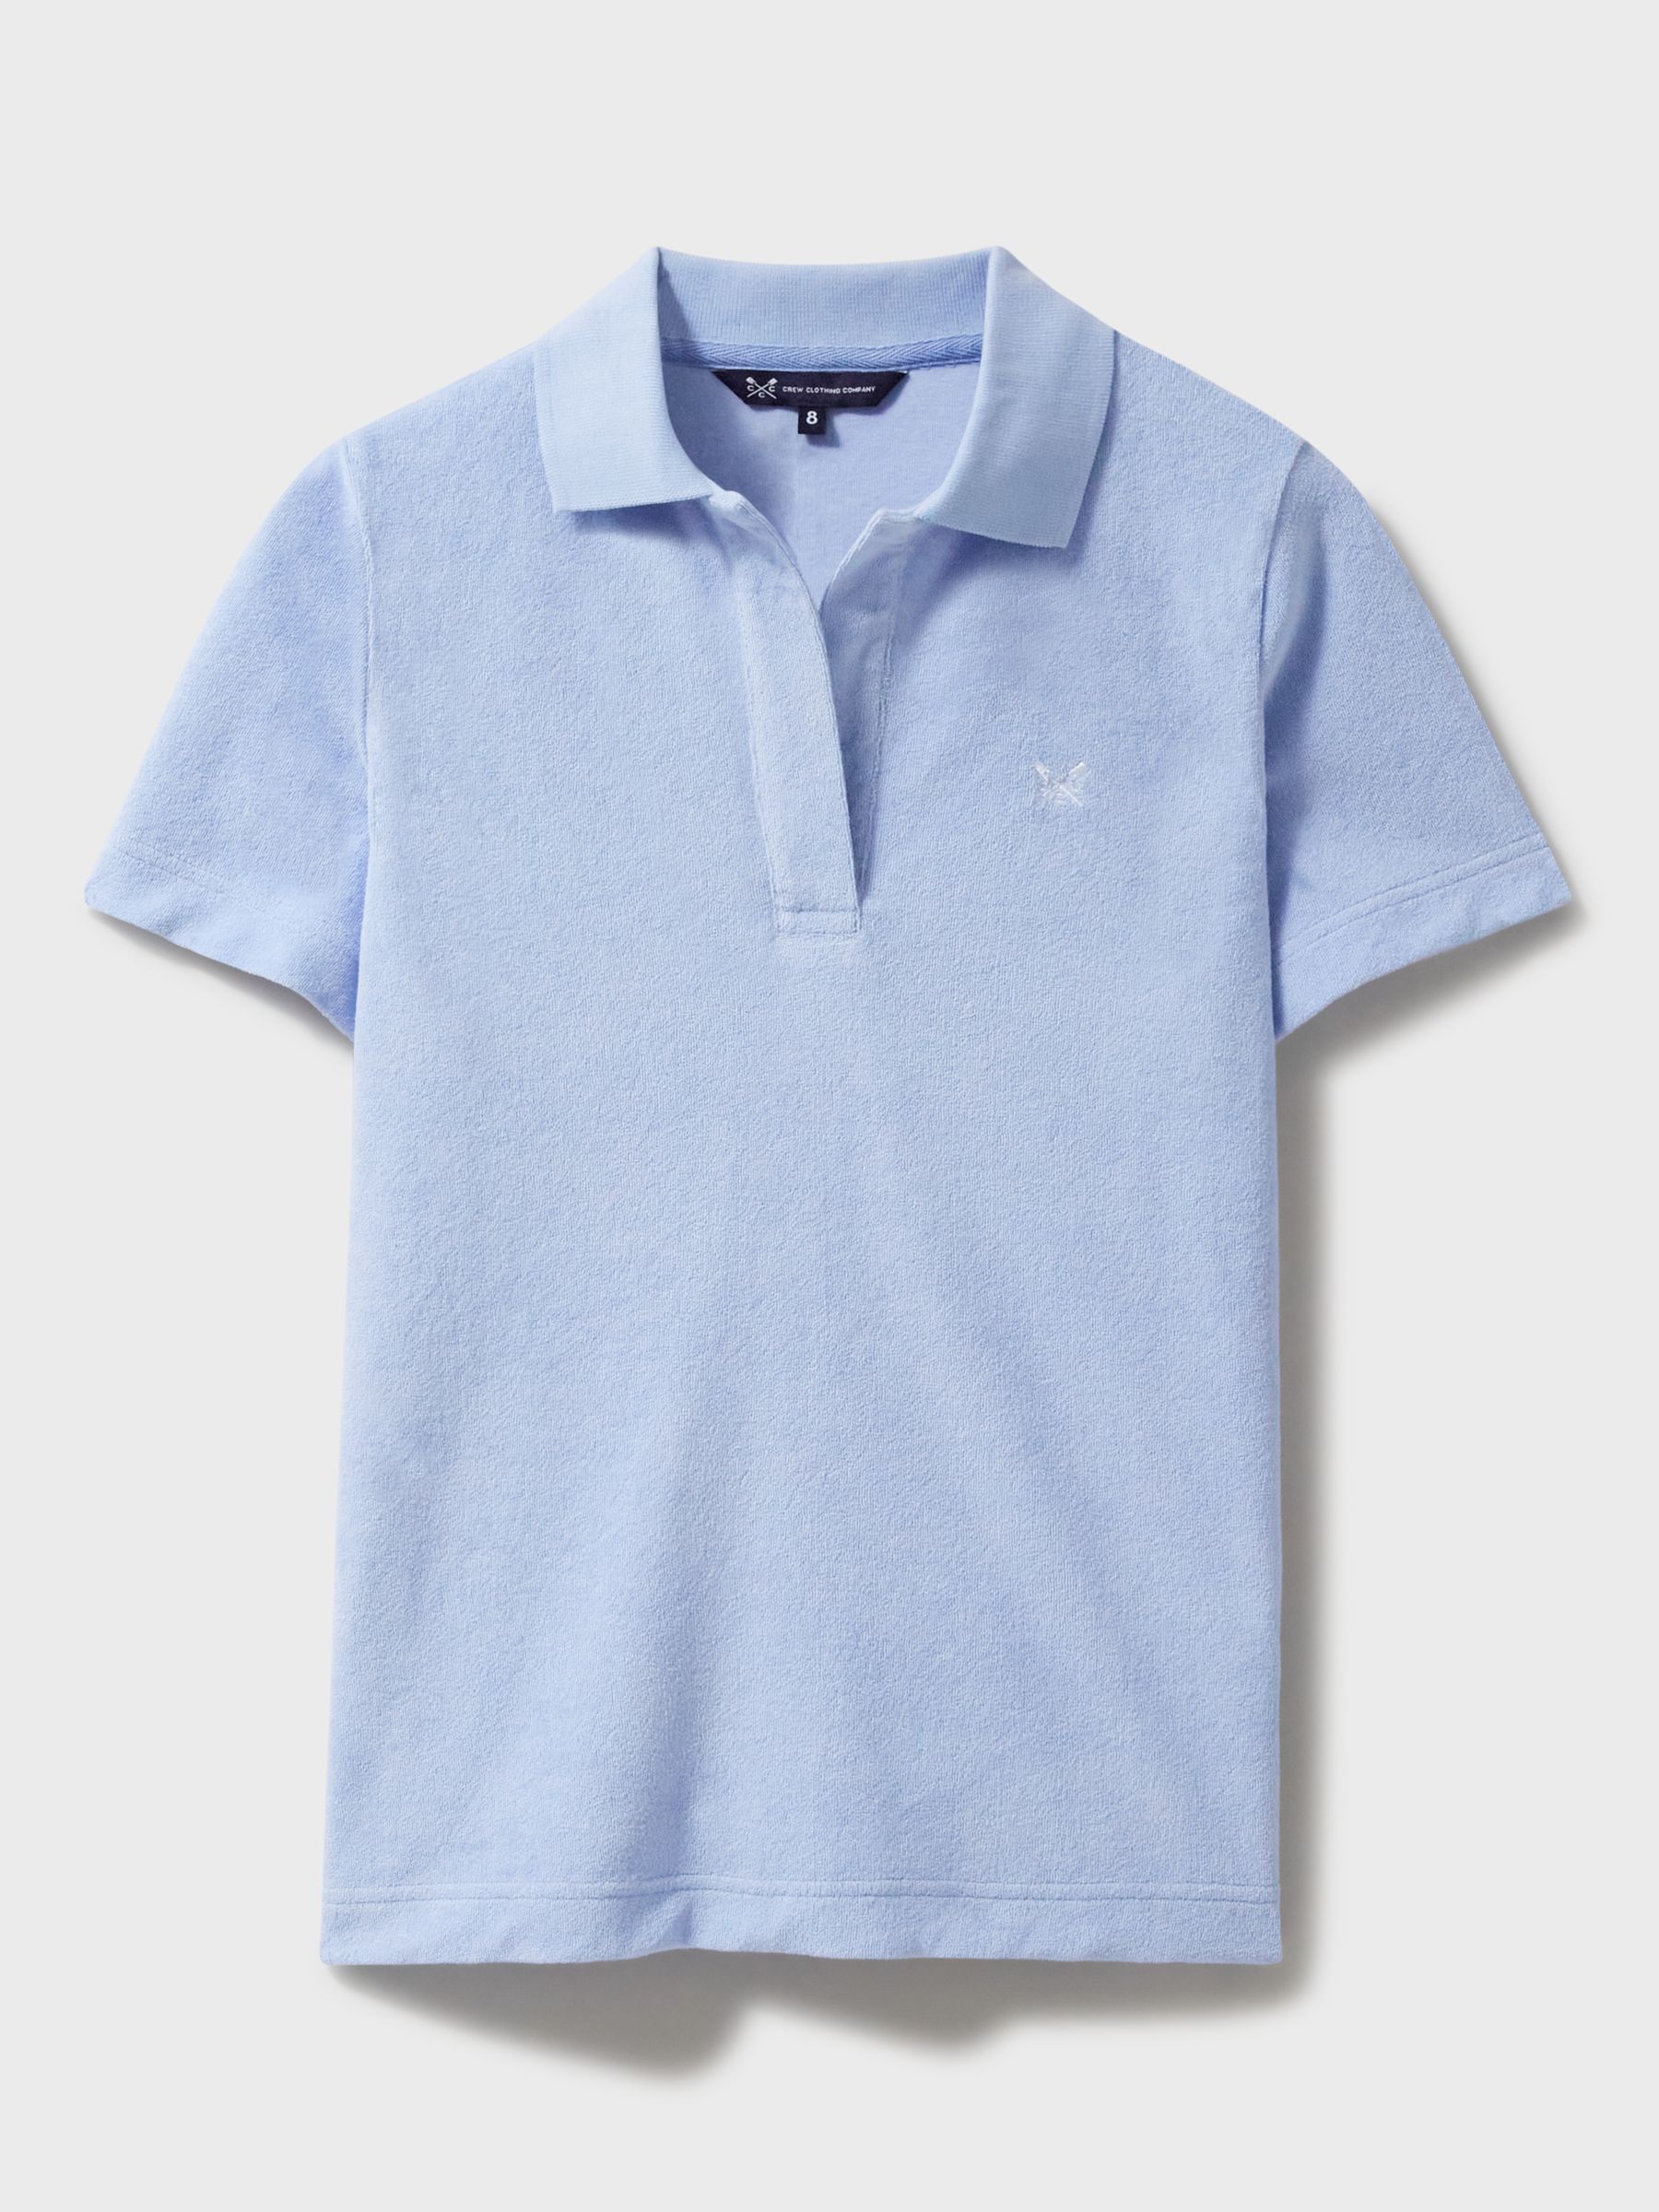 Crew Clothing Cotton Blend Polo Shirt, Light Blue, 6